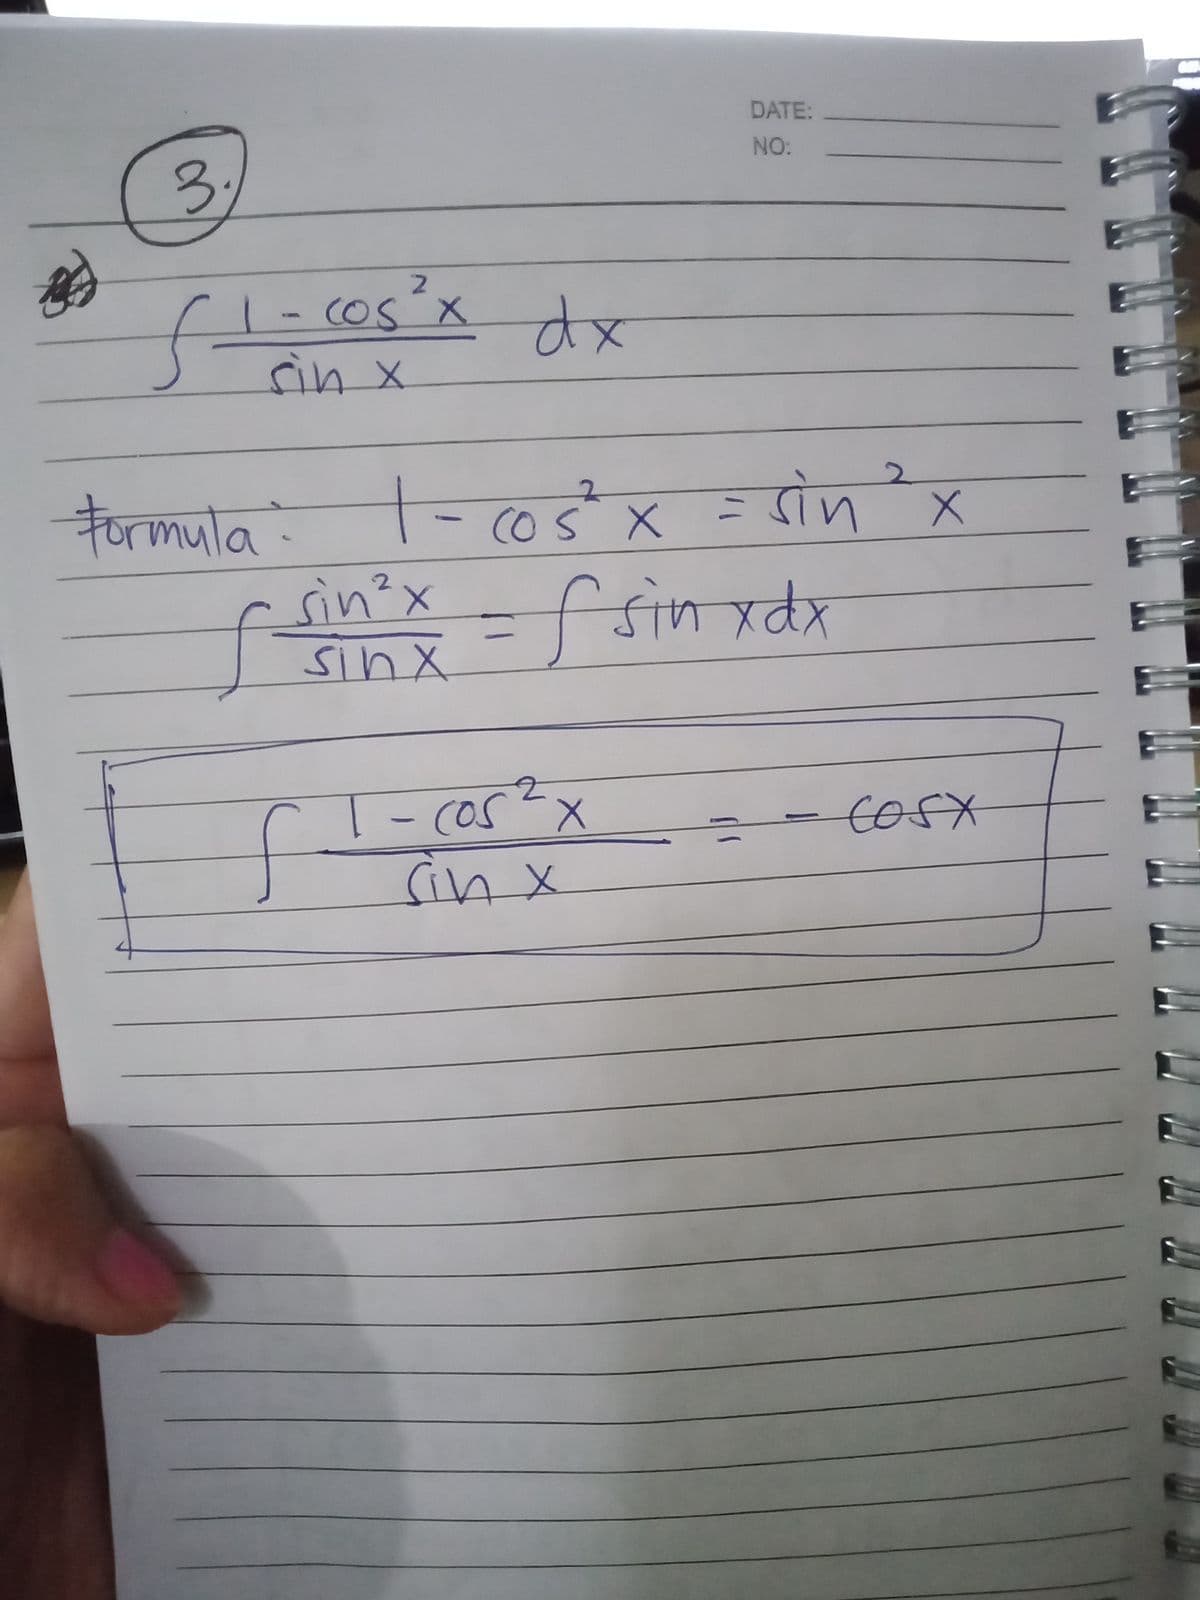 DATE:
NO:
3.
flicos'x dx
COS X
sin x
2.
तोम
Formula: T- oŚ x
तेजर x
sinx
COS X
fsin
cos-X
cos
anx
